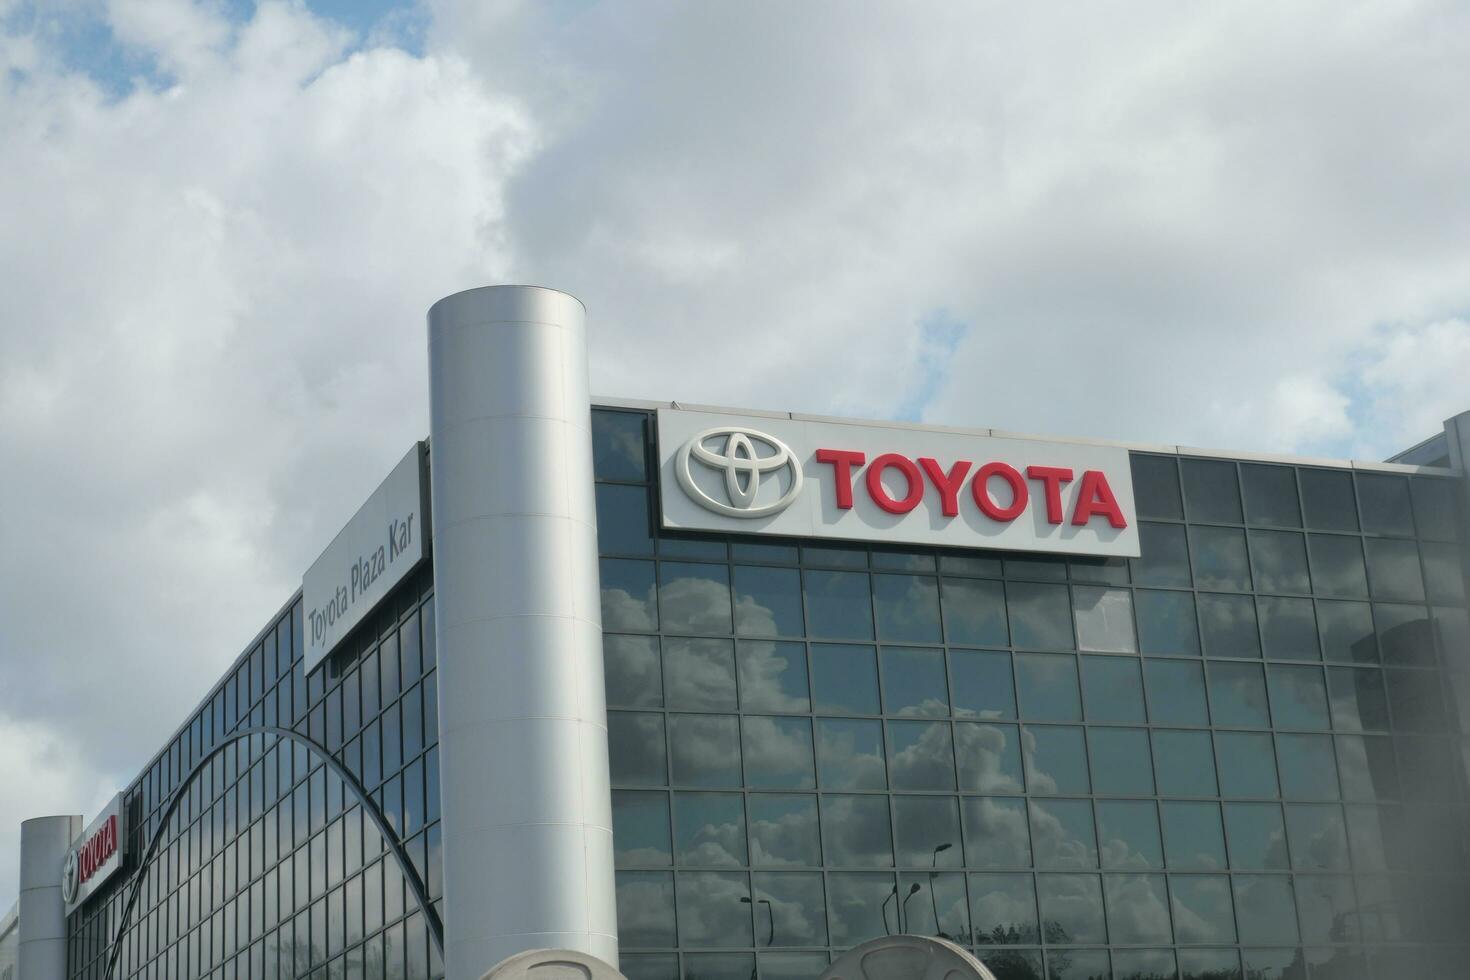 Kalkon istanbul 18 augusti 2023. Toyota varumärke namn på byggnad mot blå himmel foto